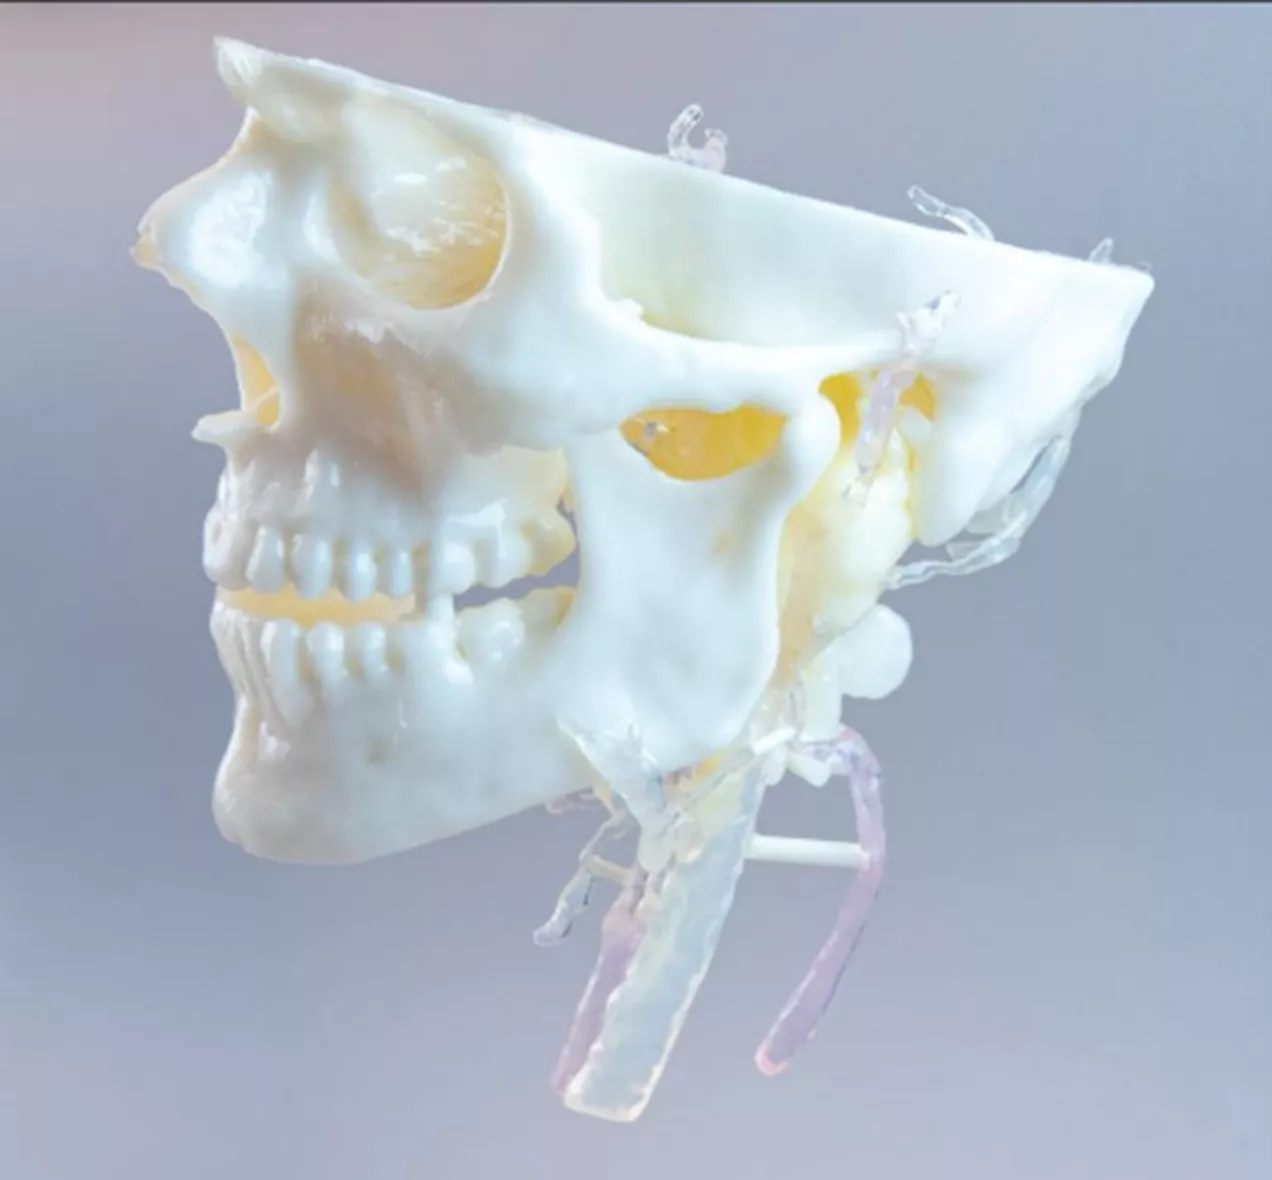 3D Printed Model of a Glomus Jugulare Tumor 